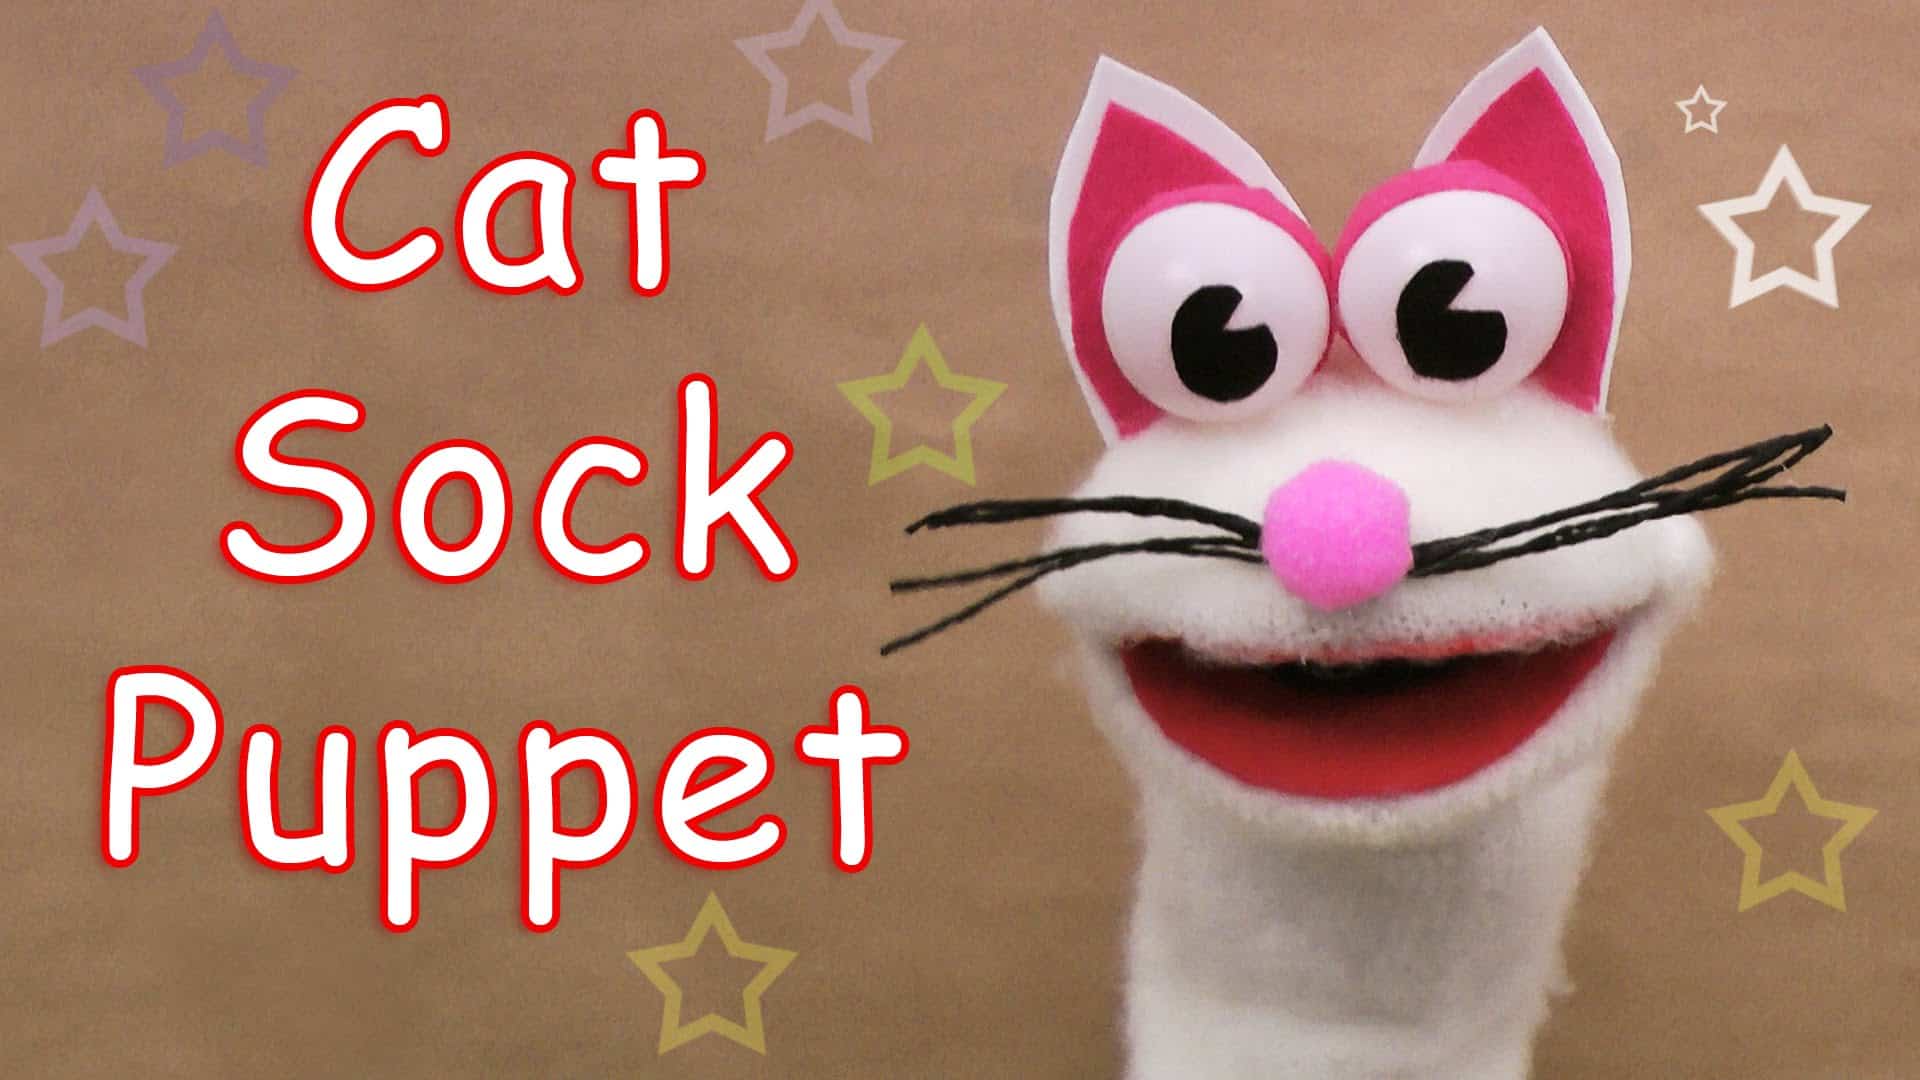 Cat sock puppet